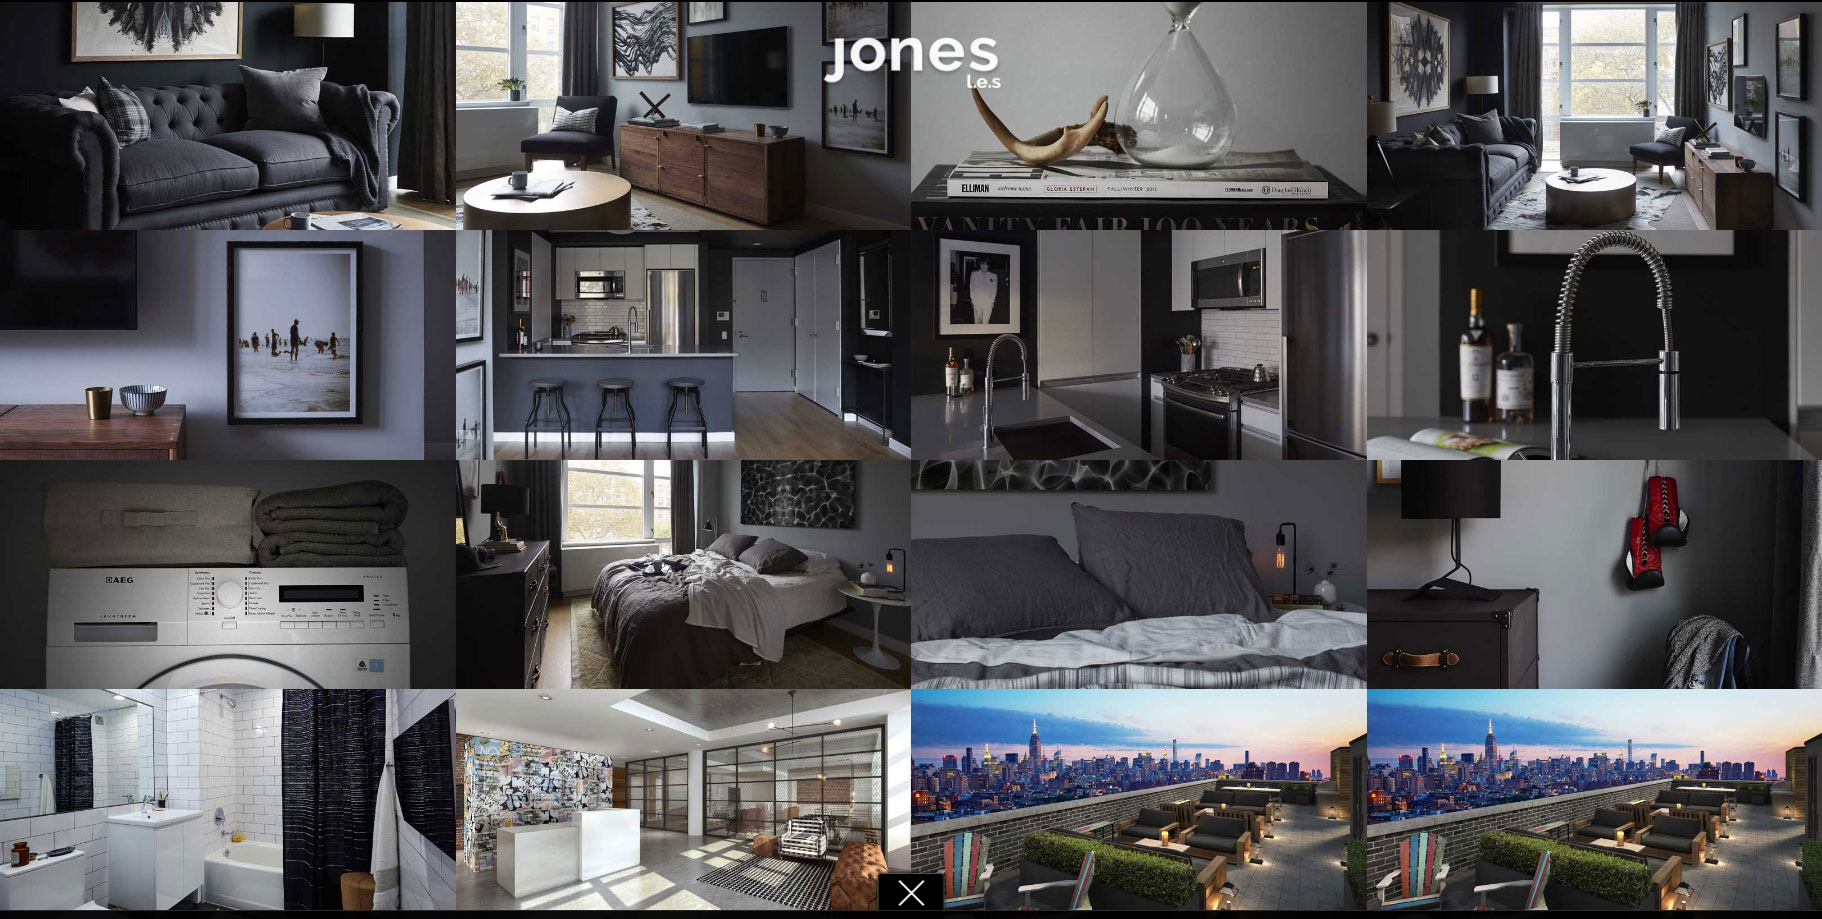 jones l.e.s. - Website of the Day